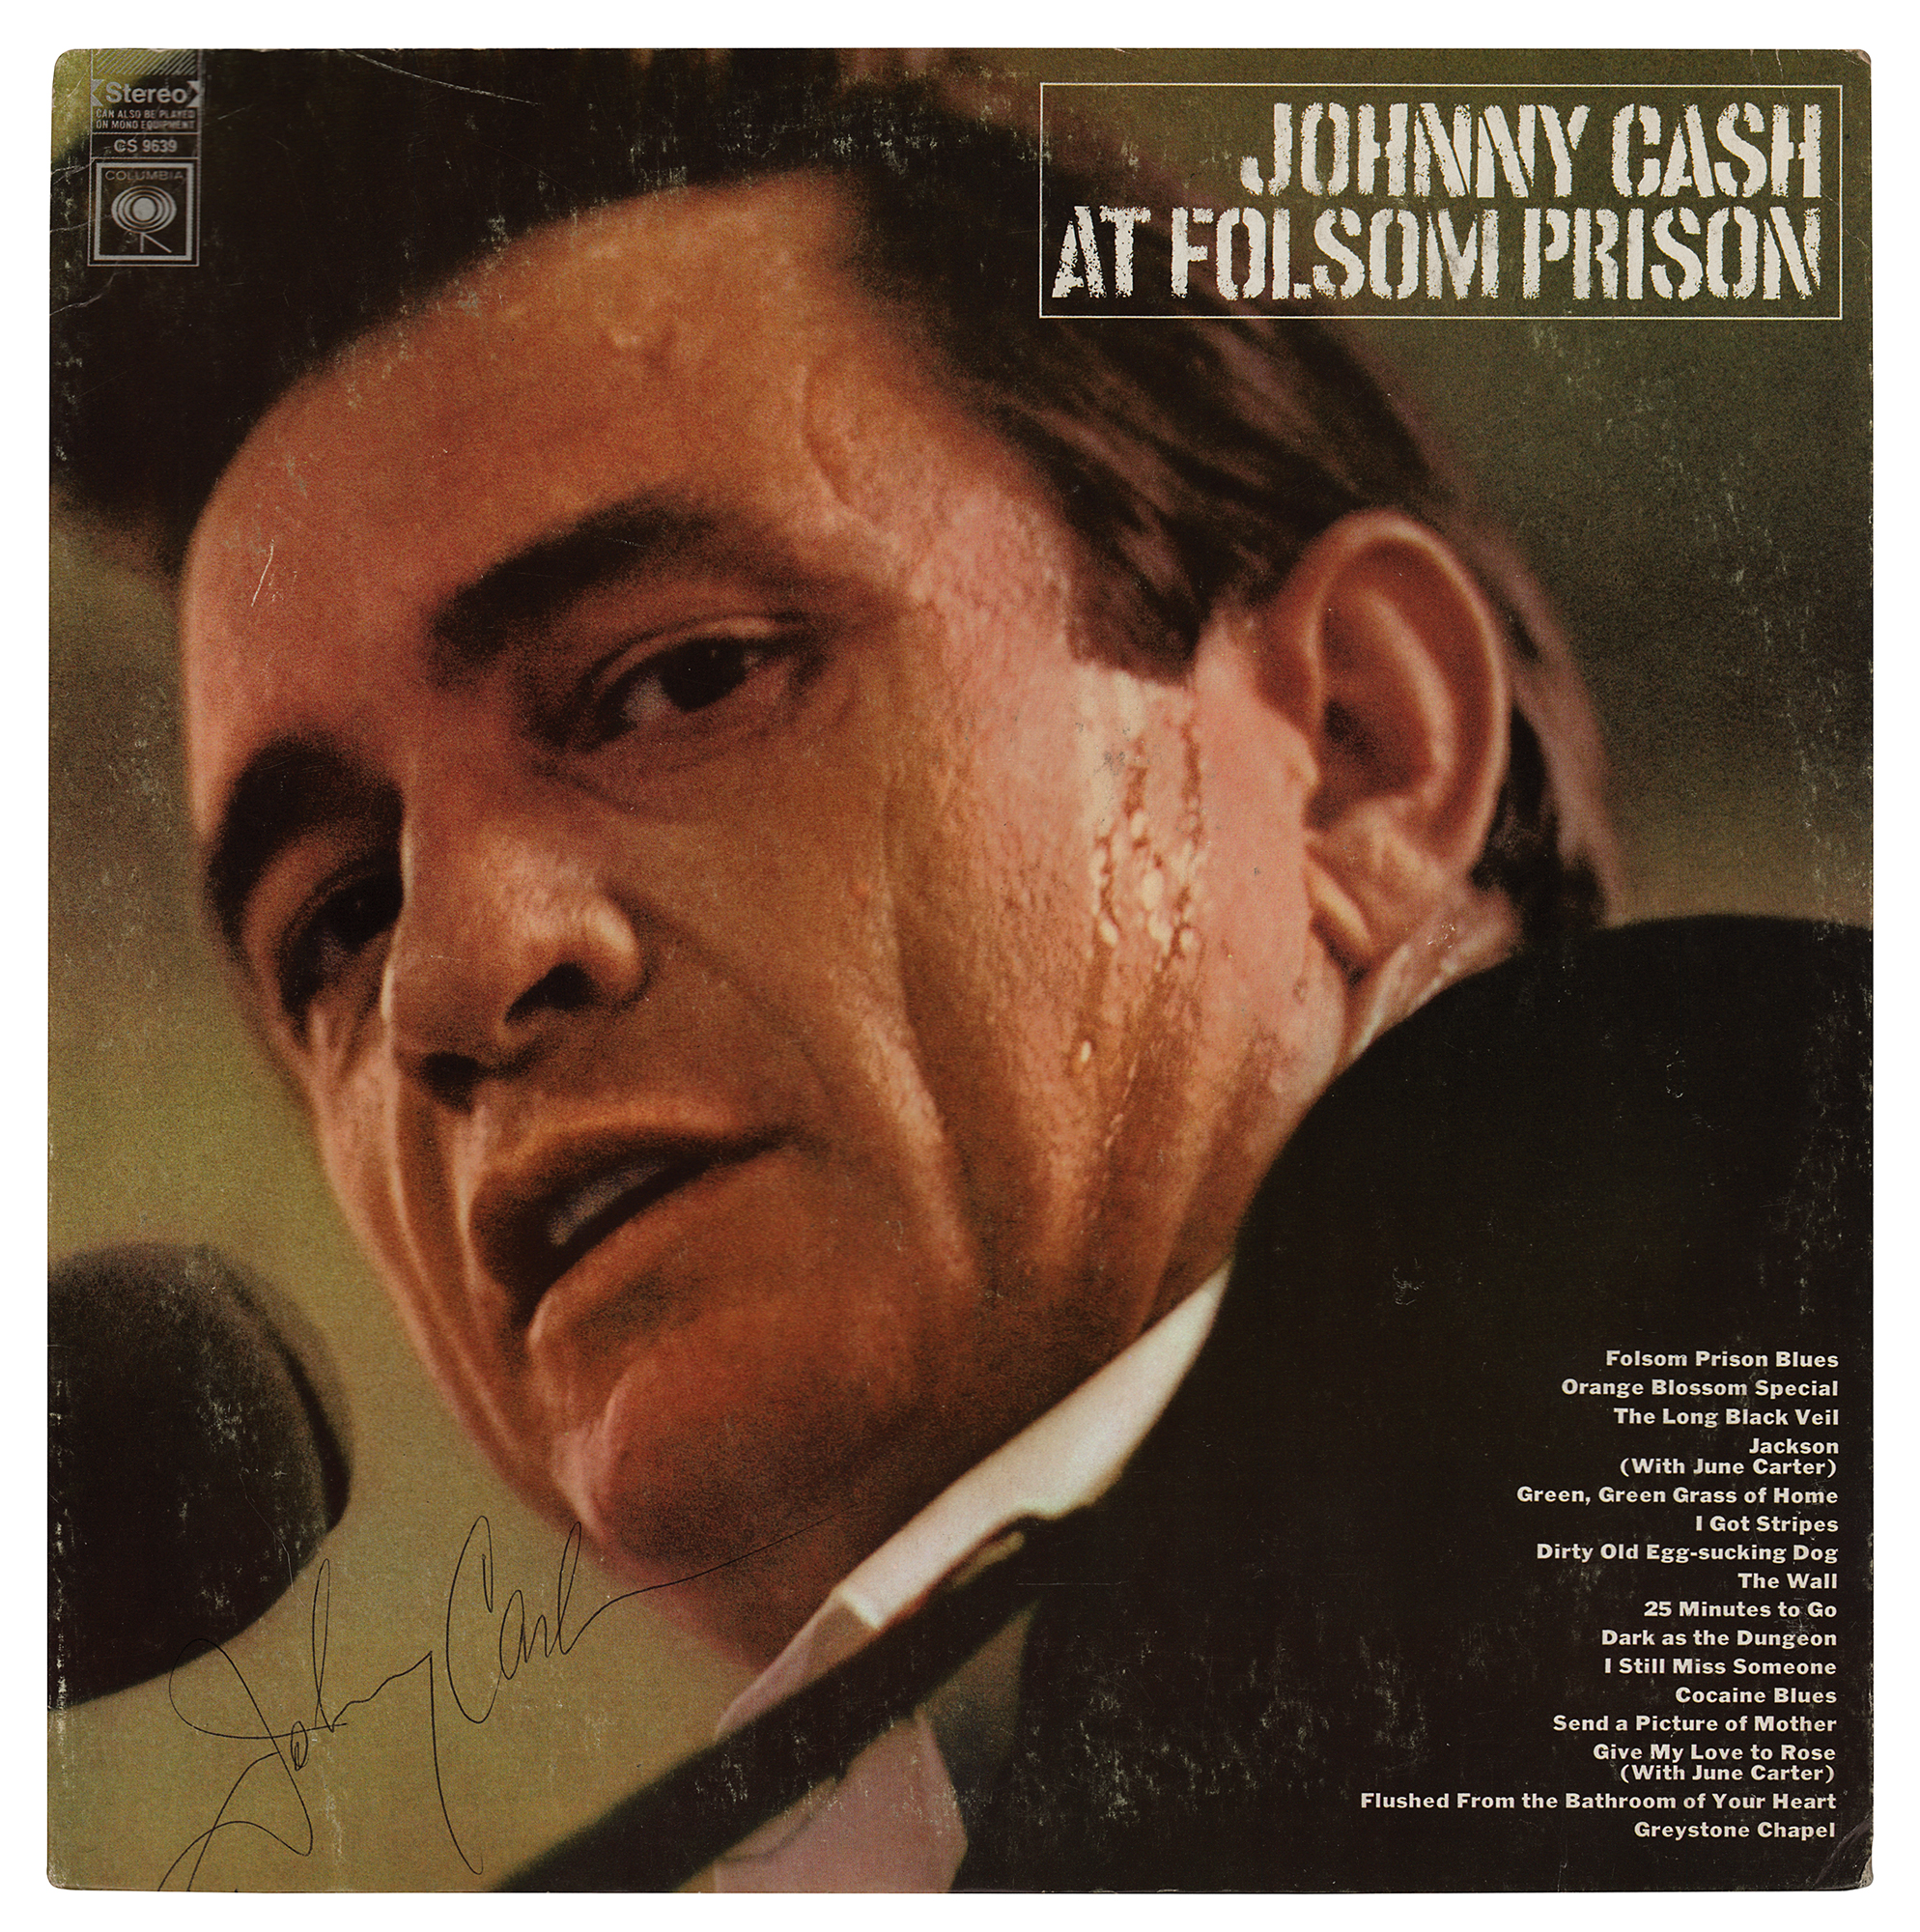 Lot #518 Johnny Cash Signed Album